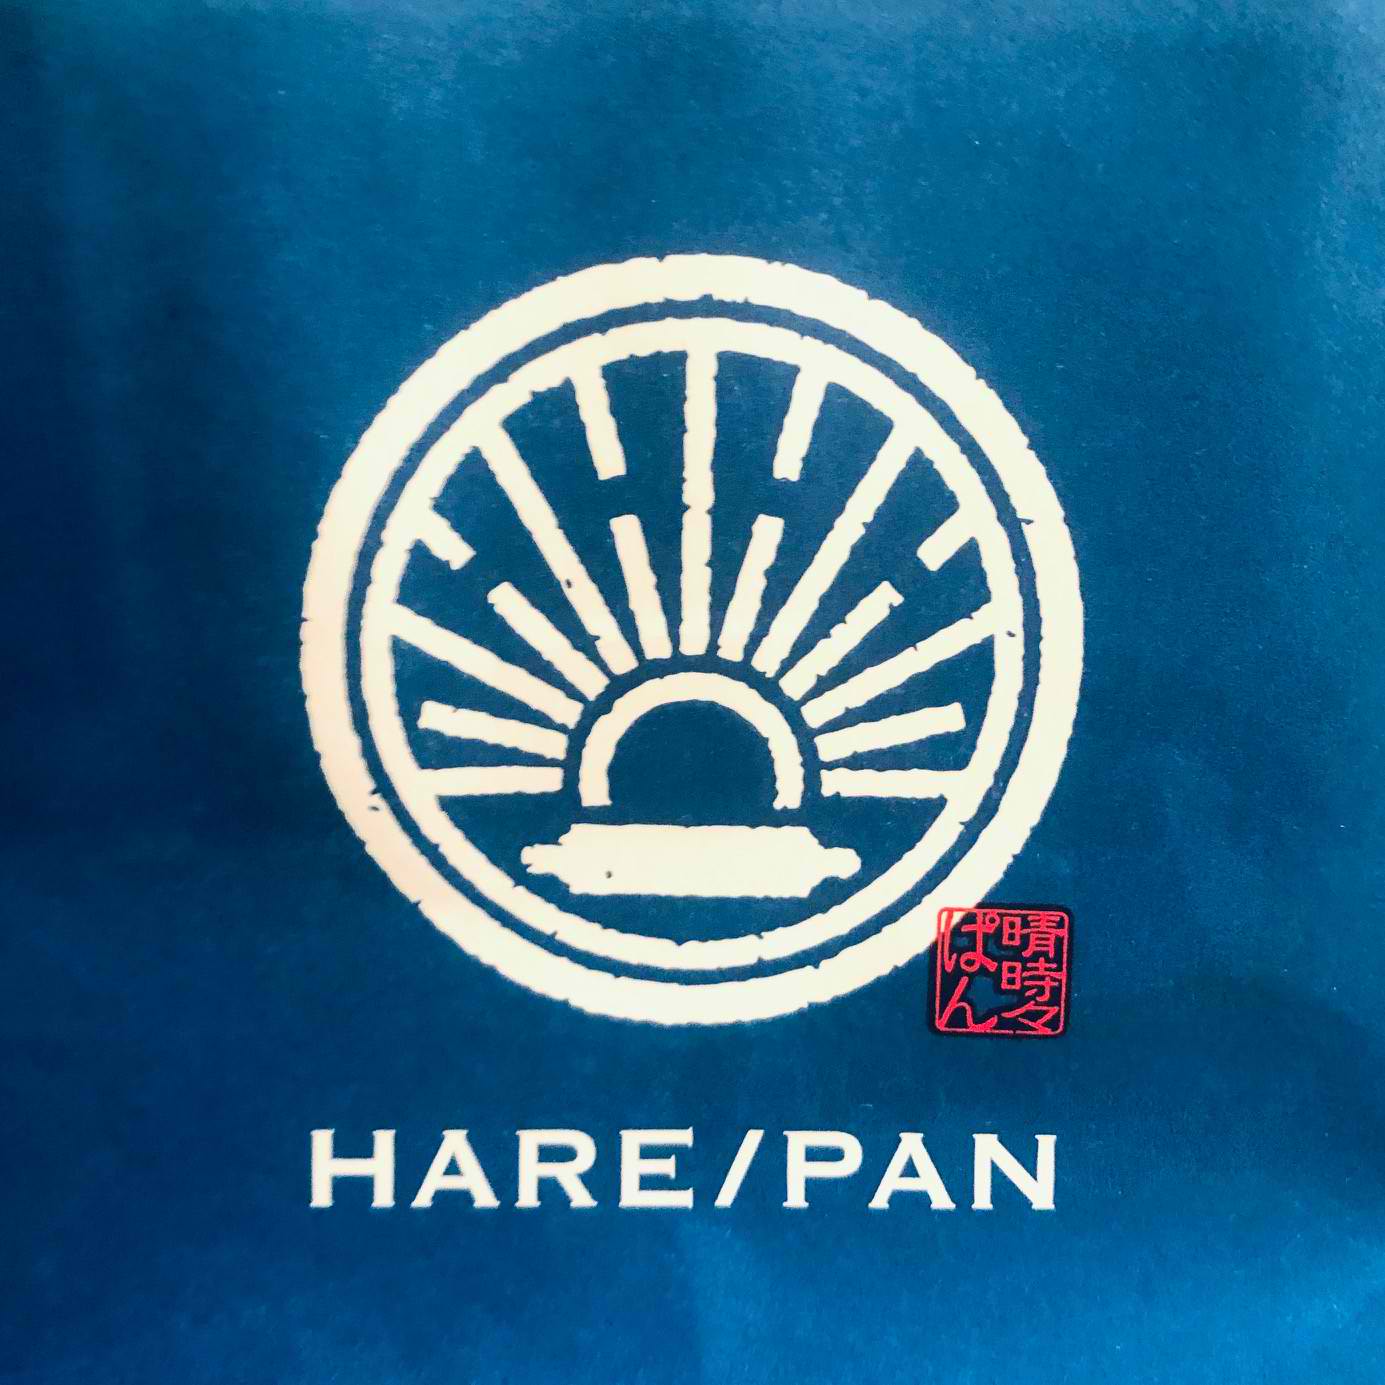 「HARE/PAN」;